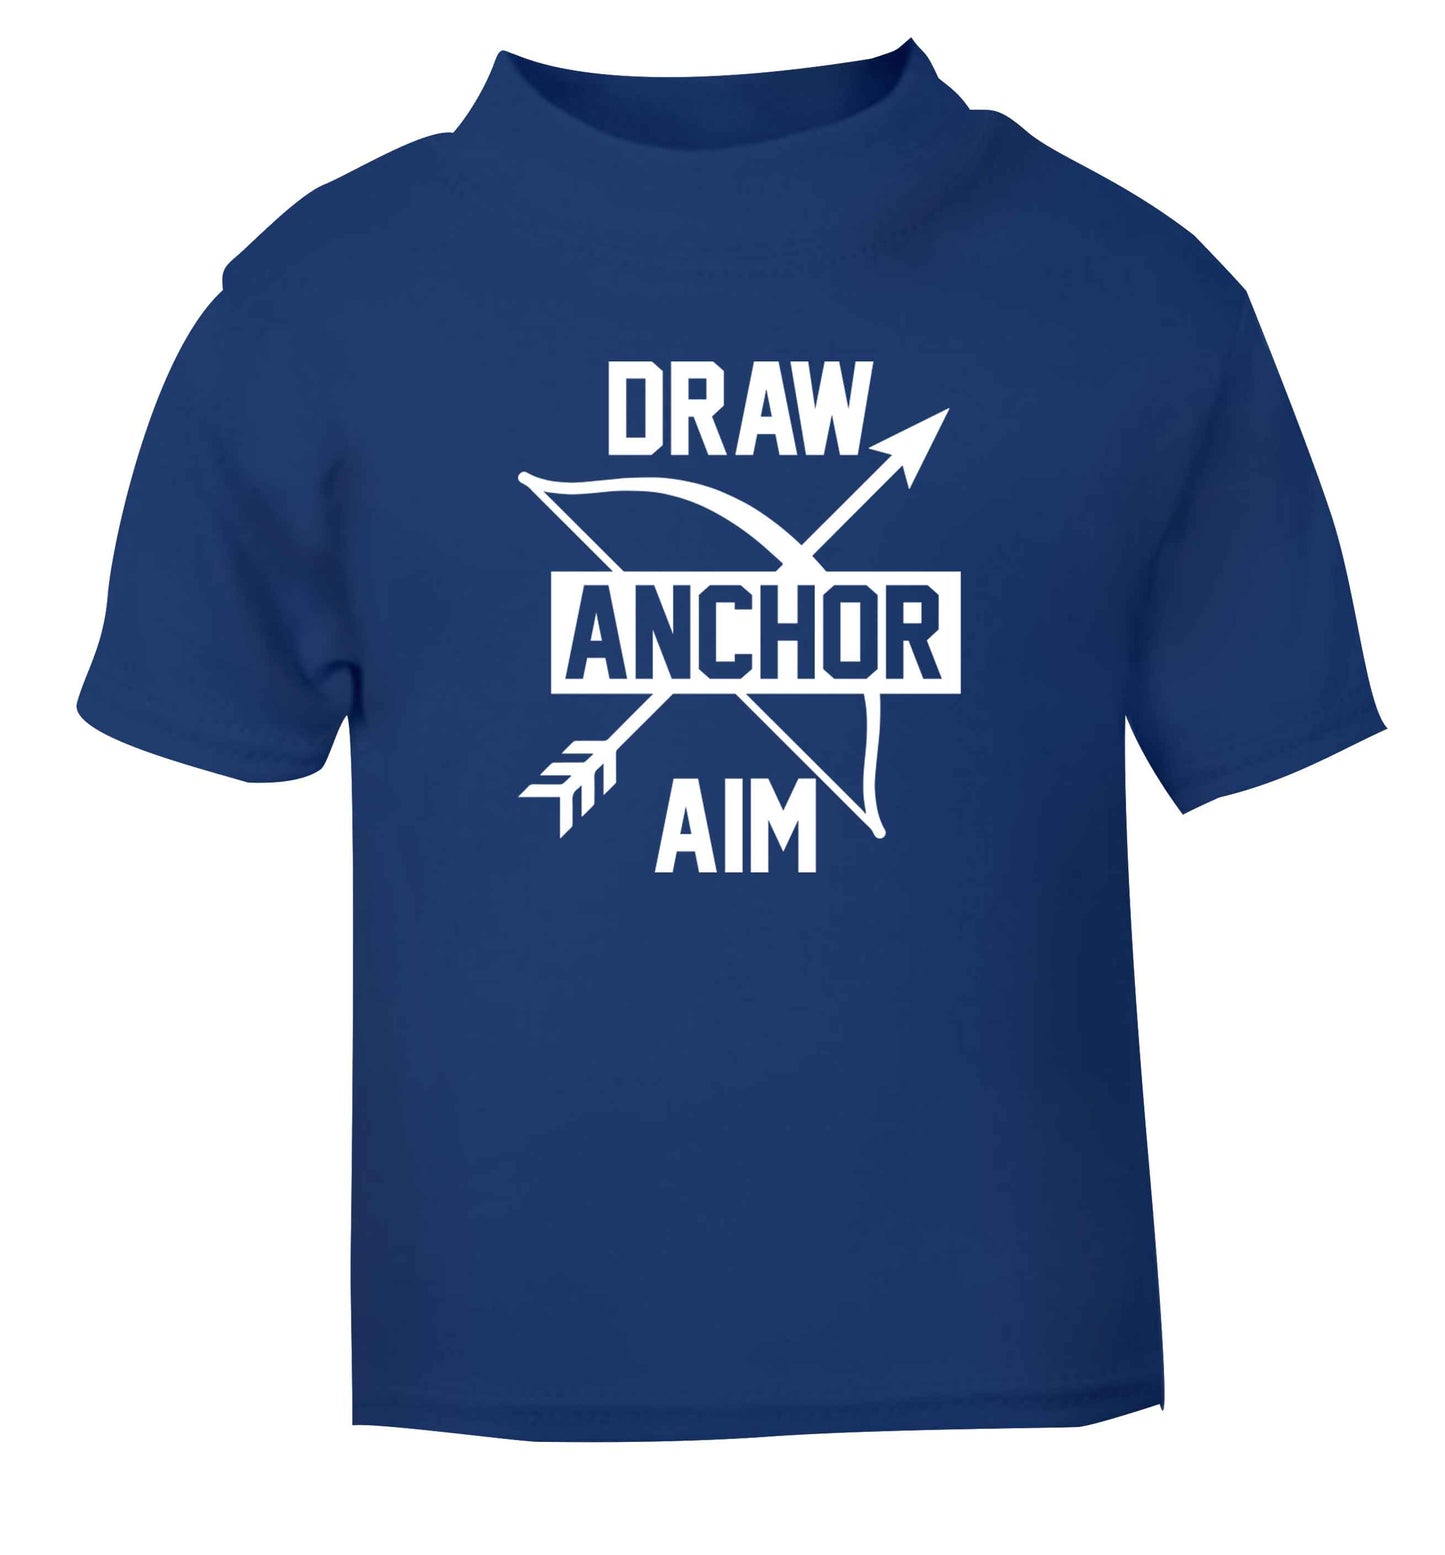 Draw anchor aim blue Baby Toddler Tshirt 2 Years